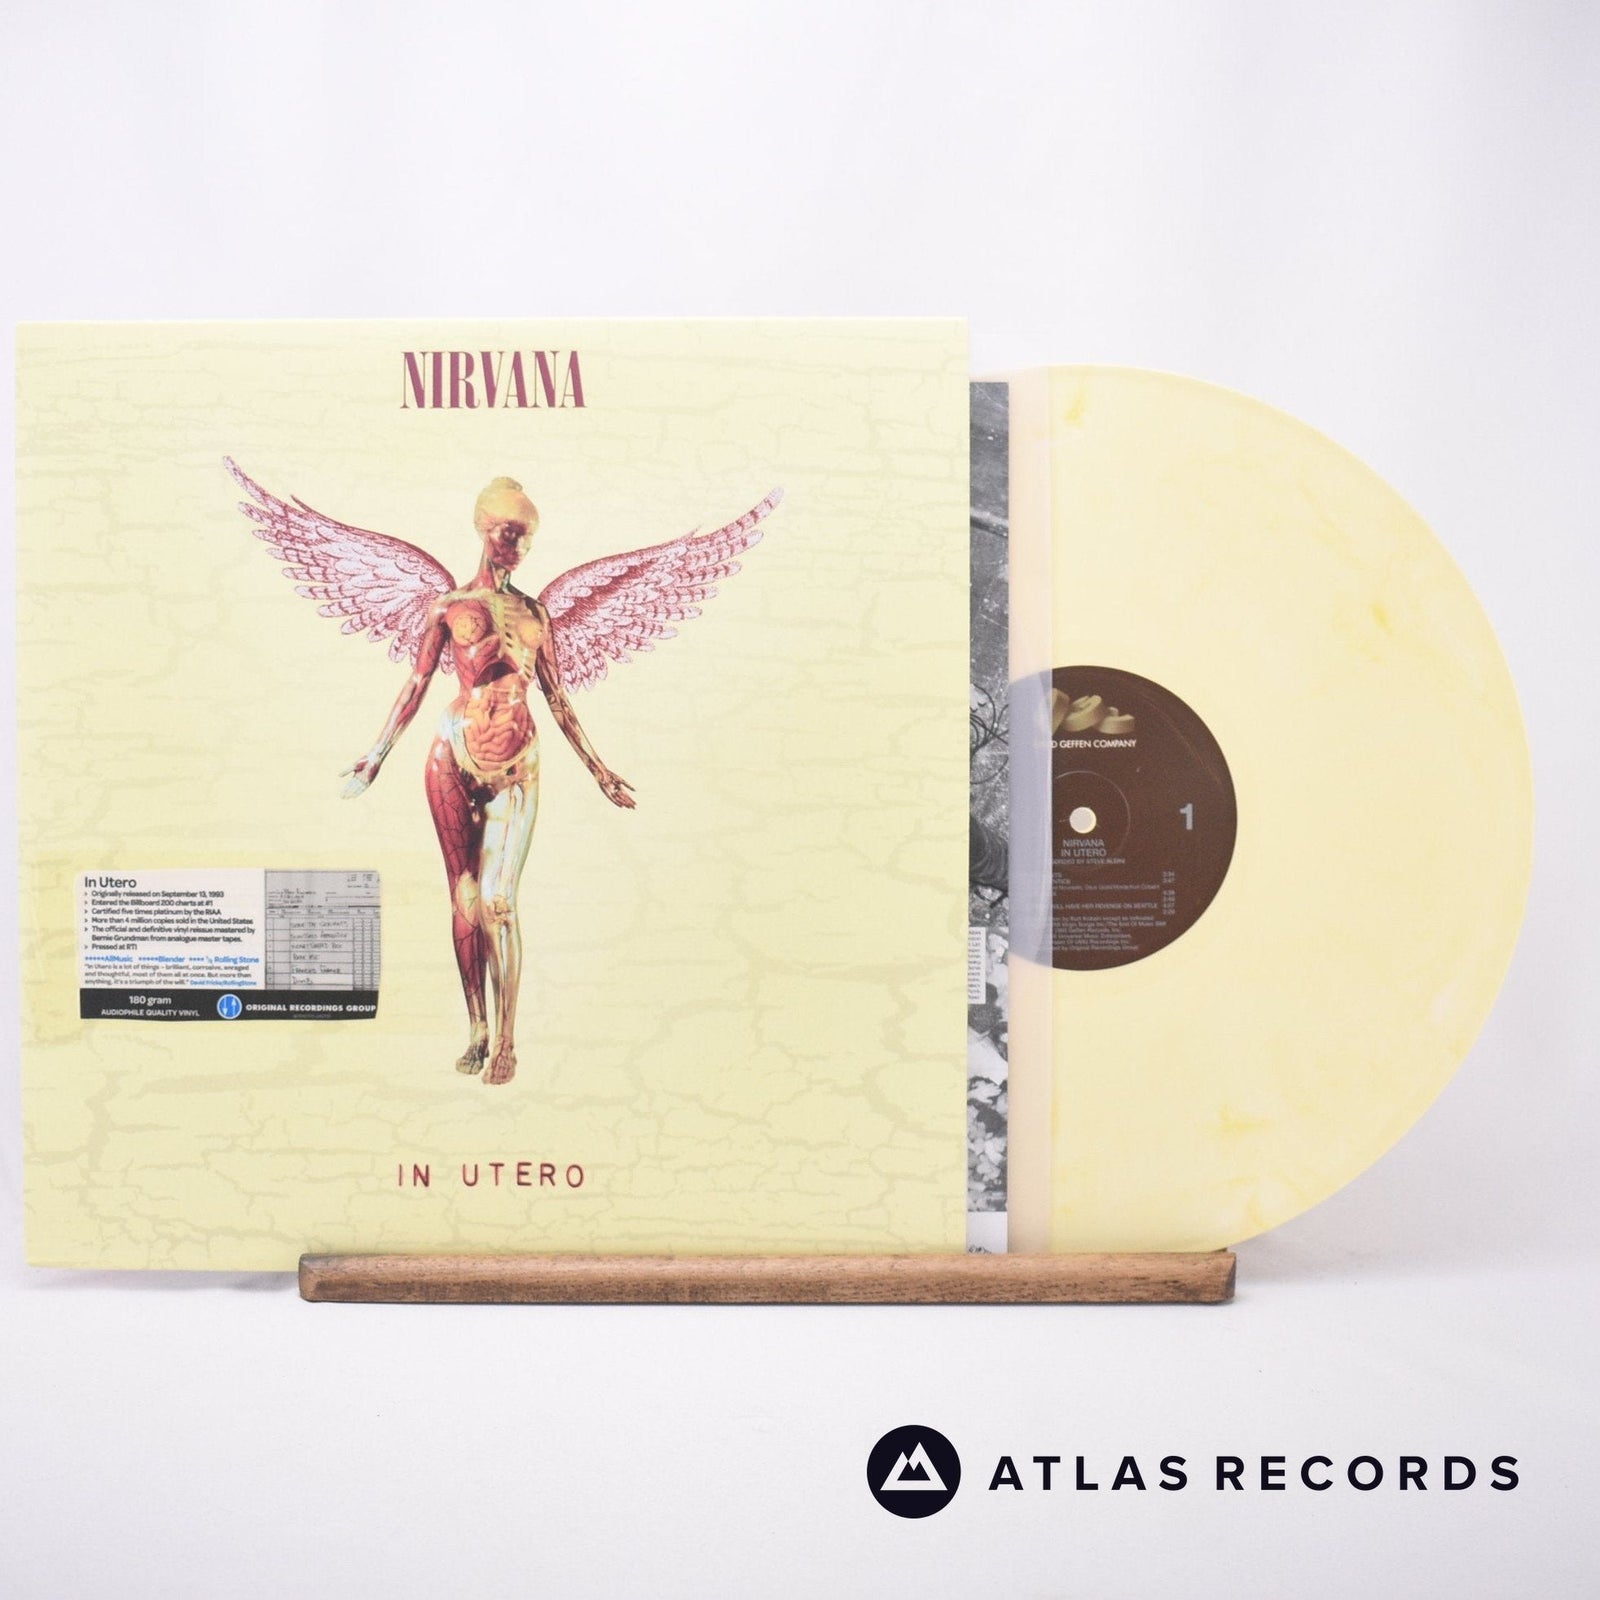 Nirvana 180 gram vinyl record